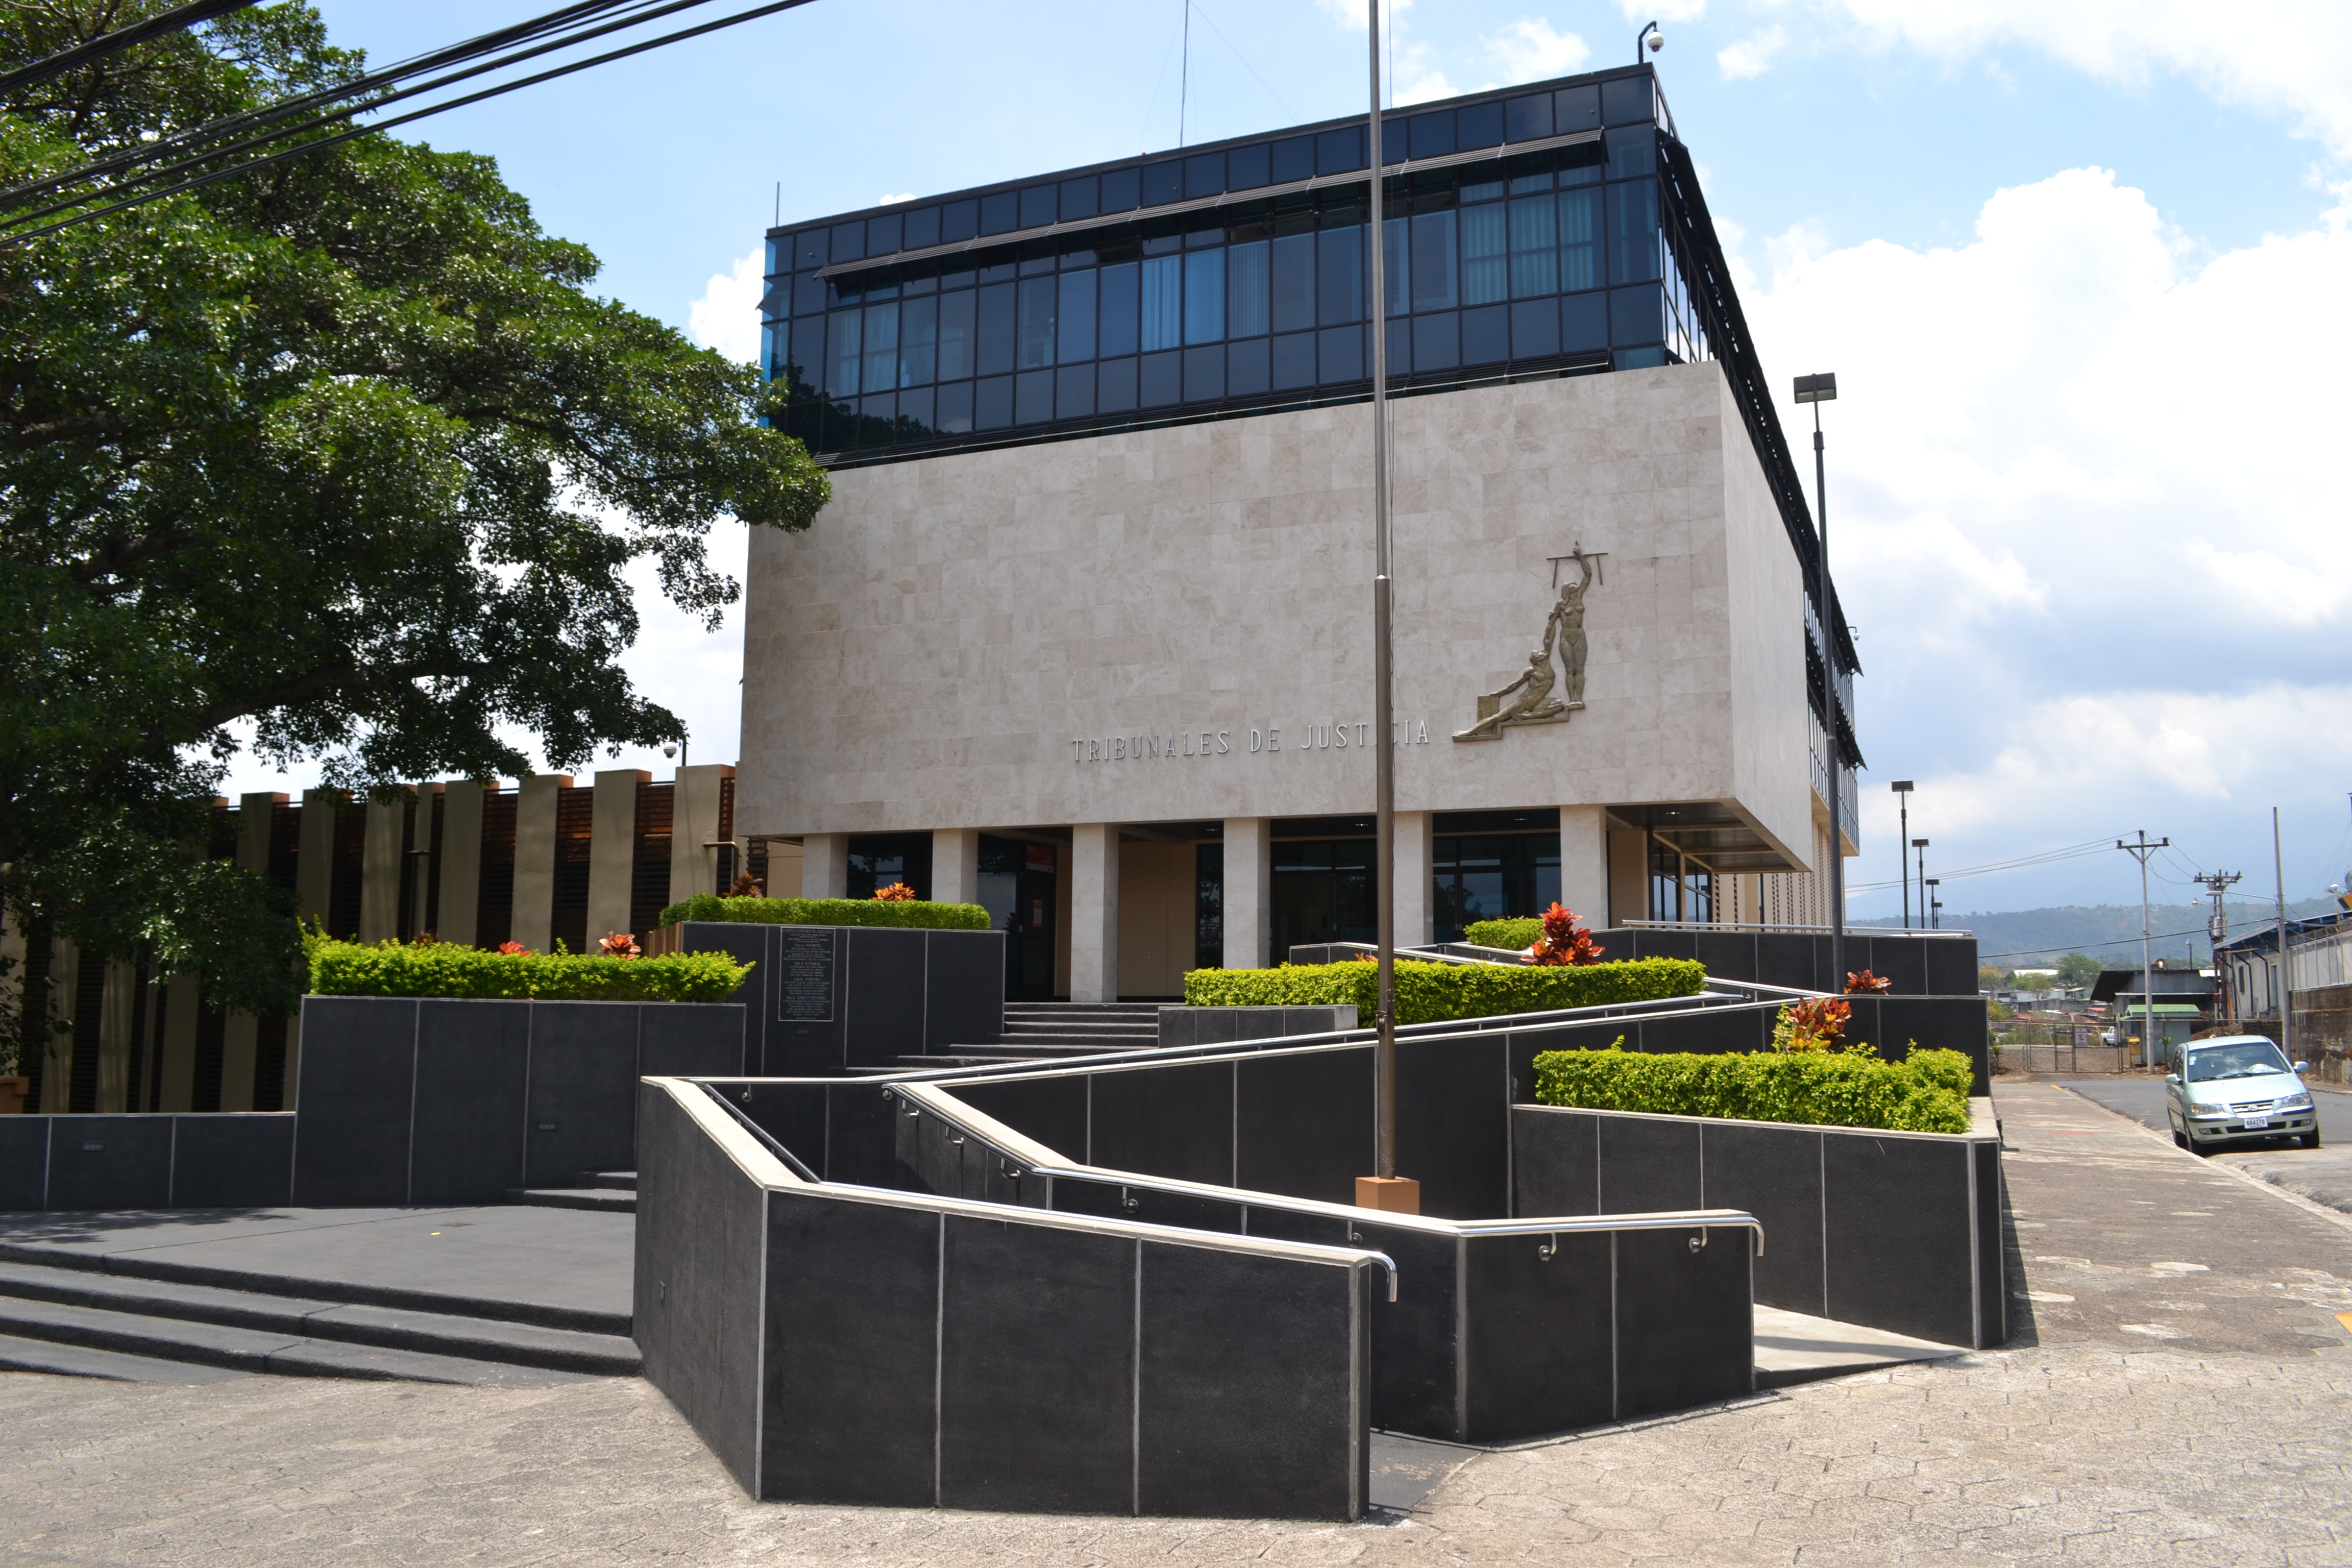 Foto: TRIBUNALES DE JUSTICIA DE ALAJUELA - Alajuela, Costa Rica